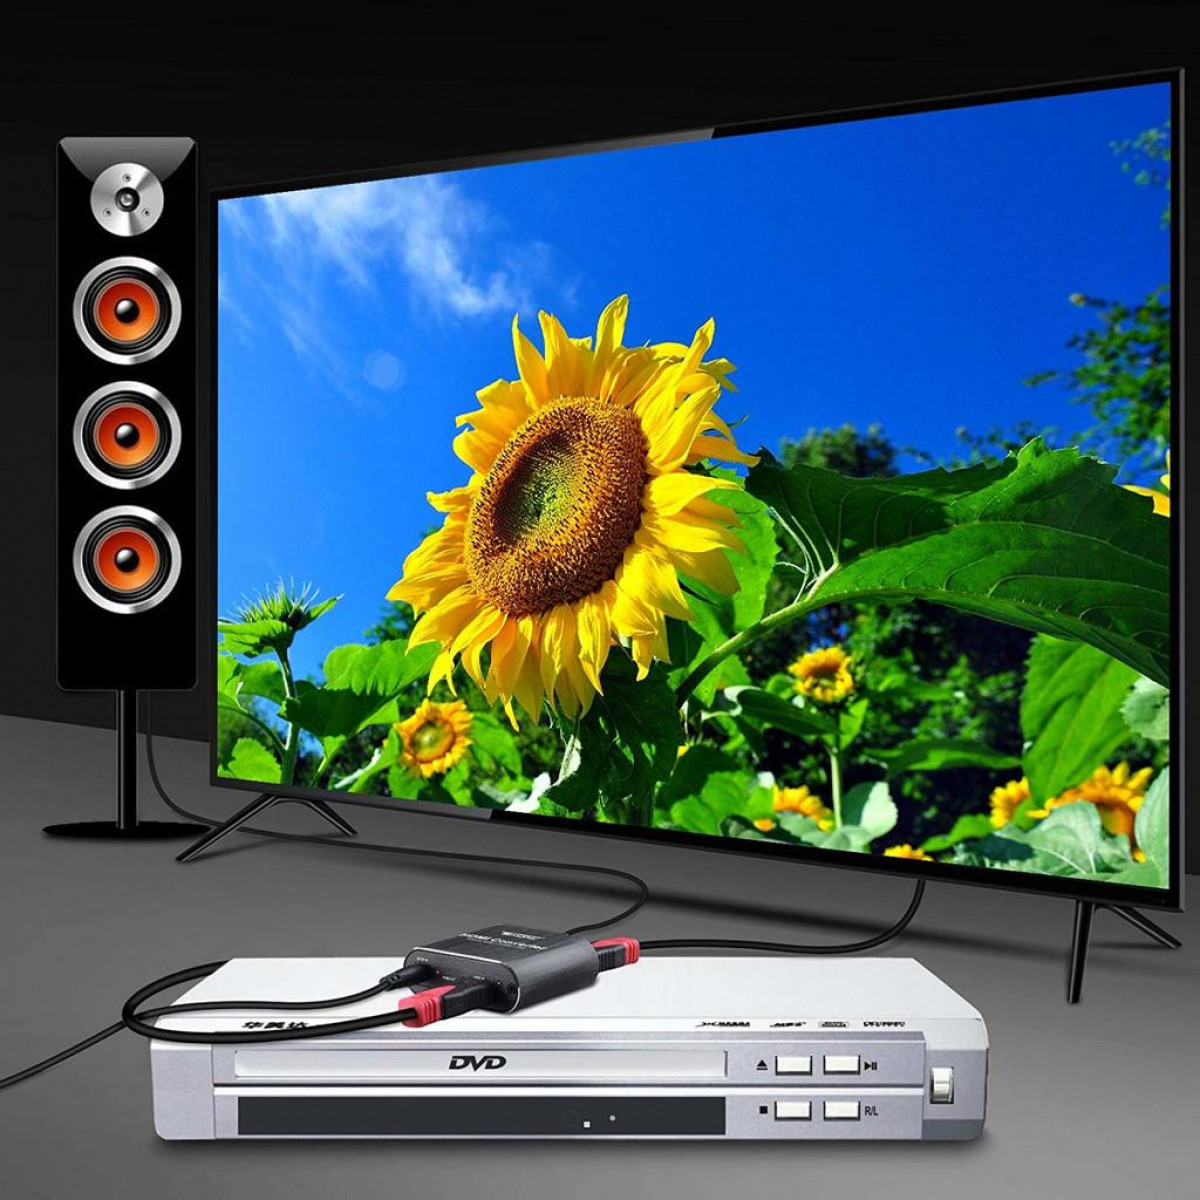 Extractor/Splitter HDMI + INF mm, 3.5 Audio zu Audio HDMI Extractor/Splitter ARC) 4K (SPDIF, Audio